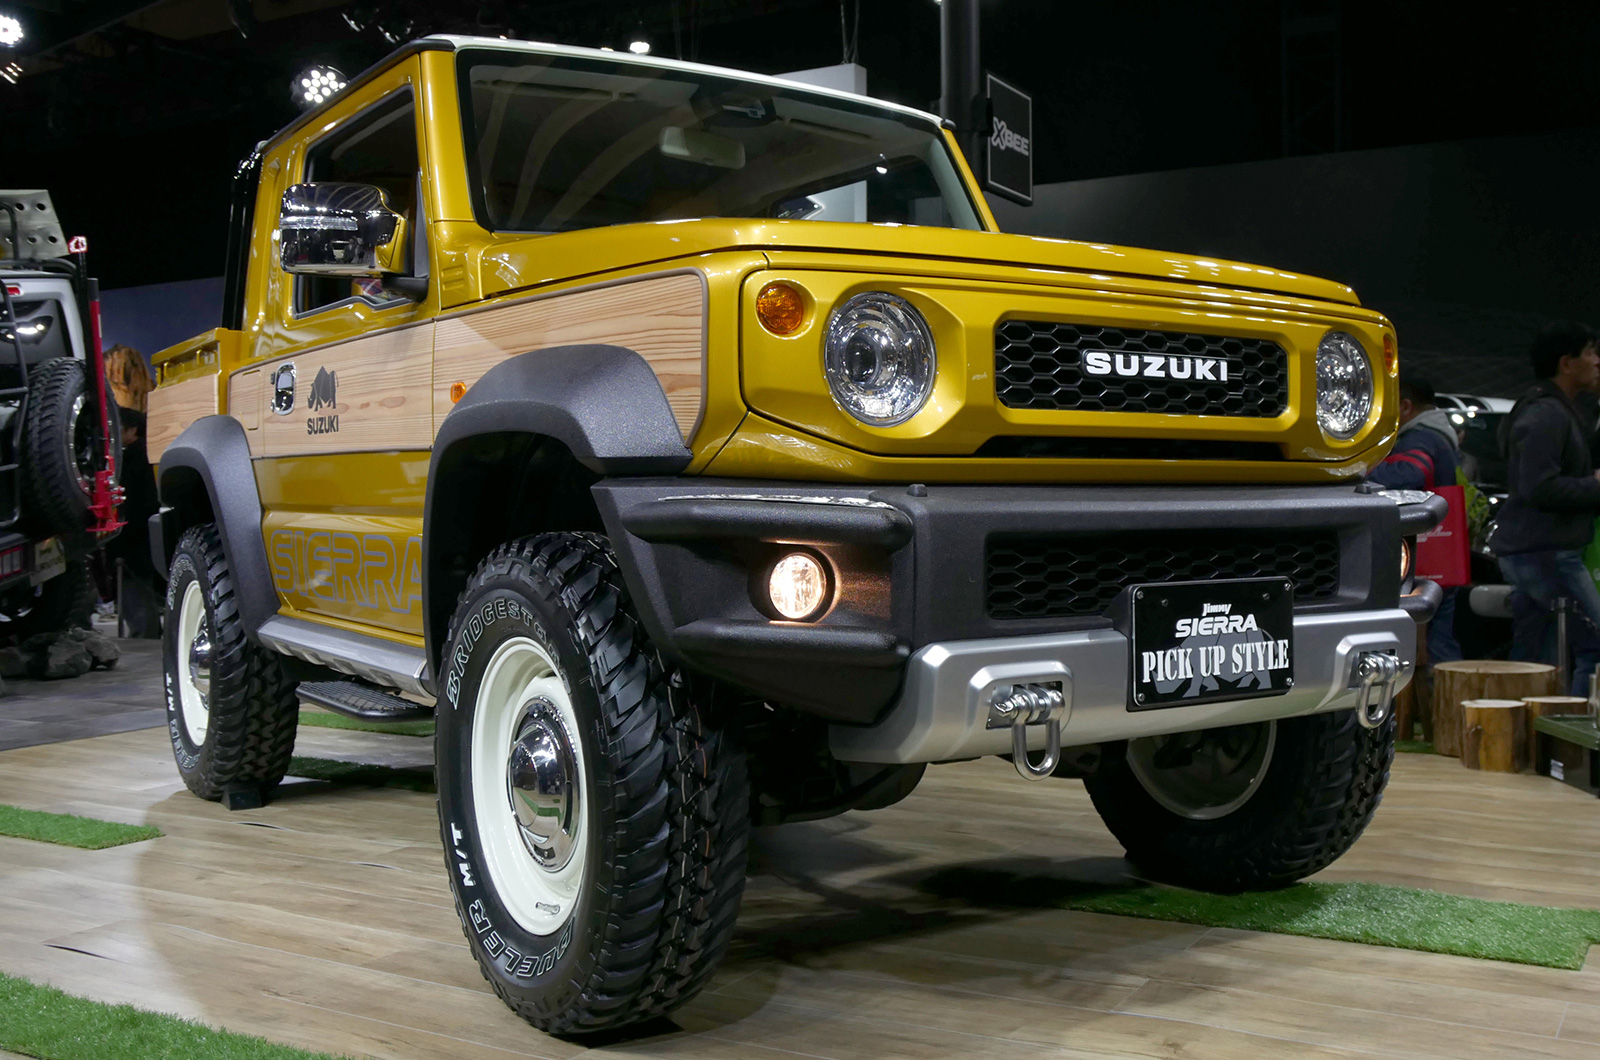 Suzuki Jimny Sierra Pickup Style